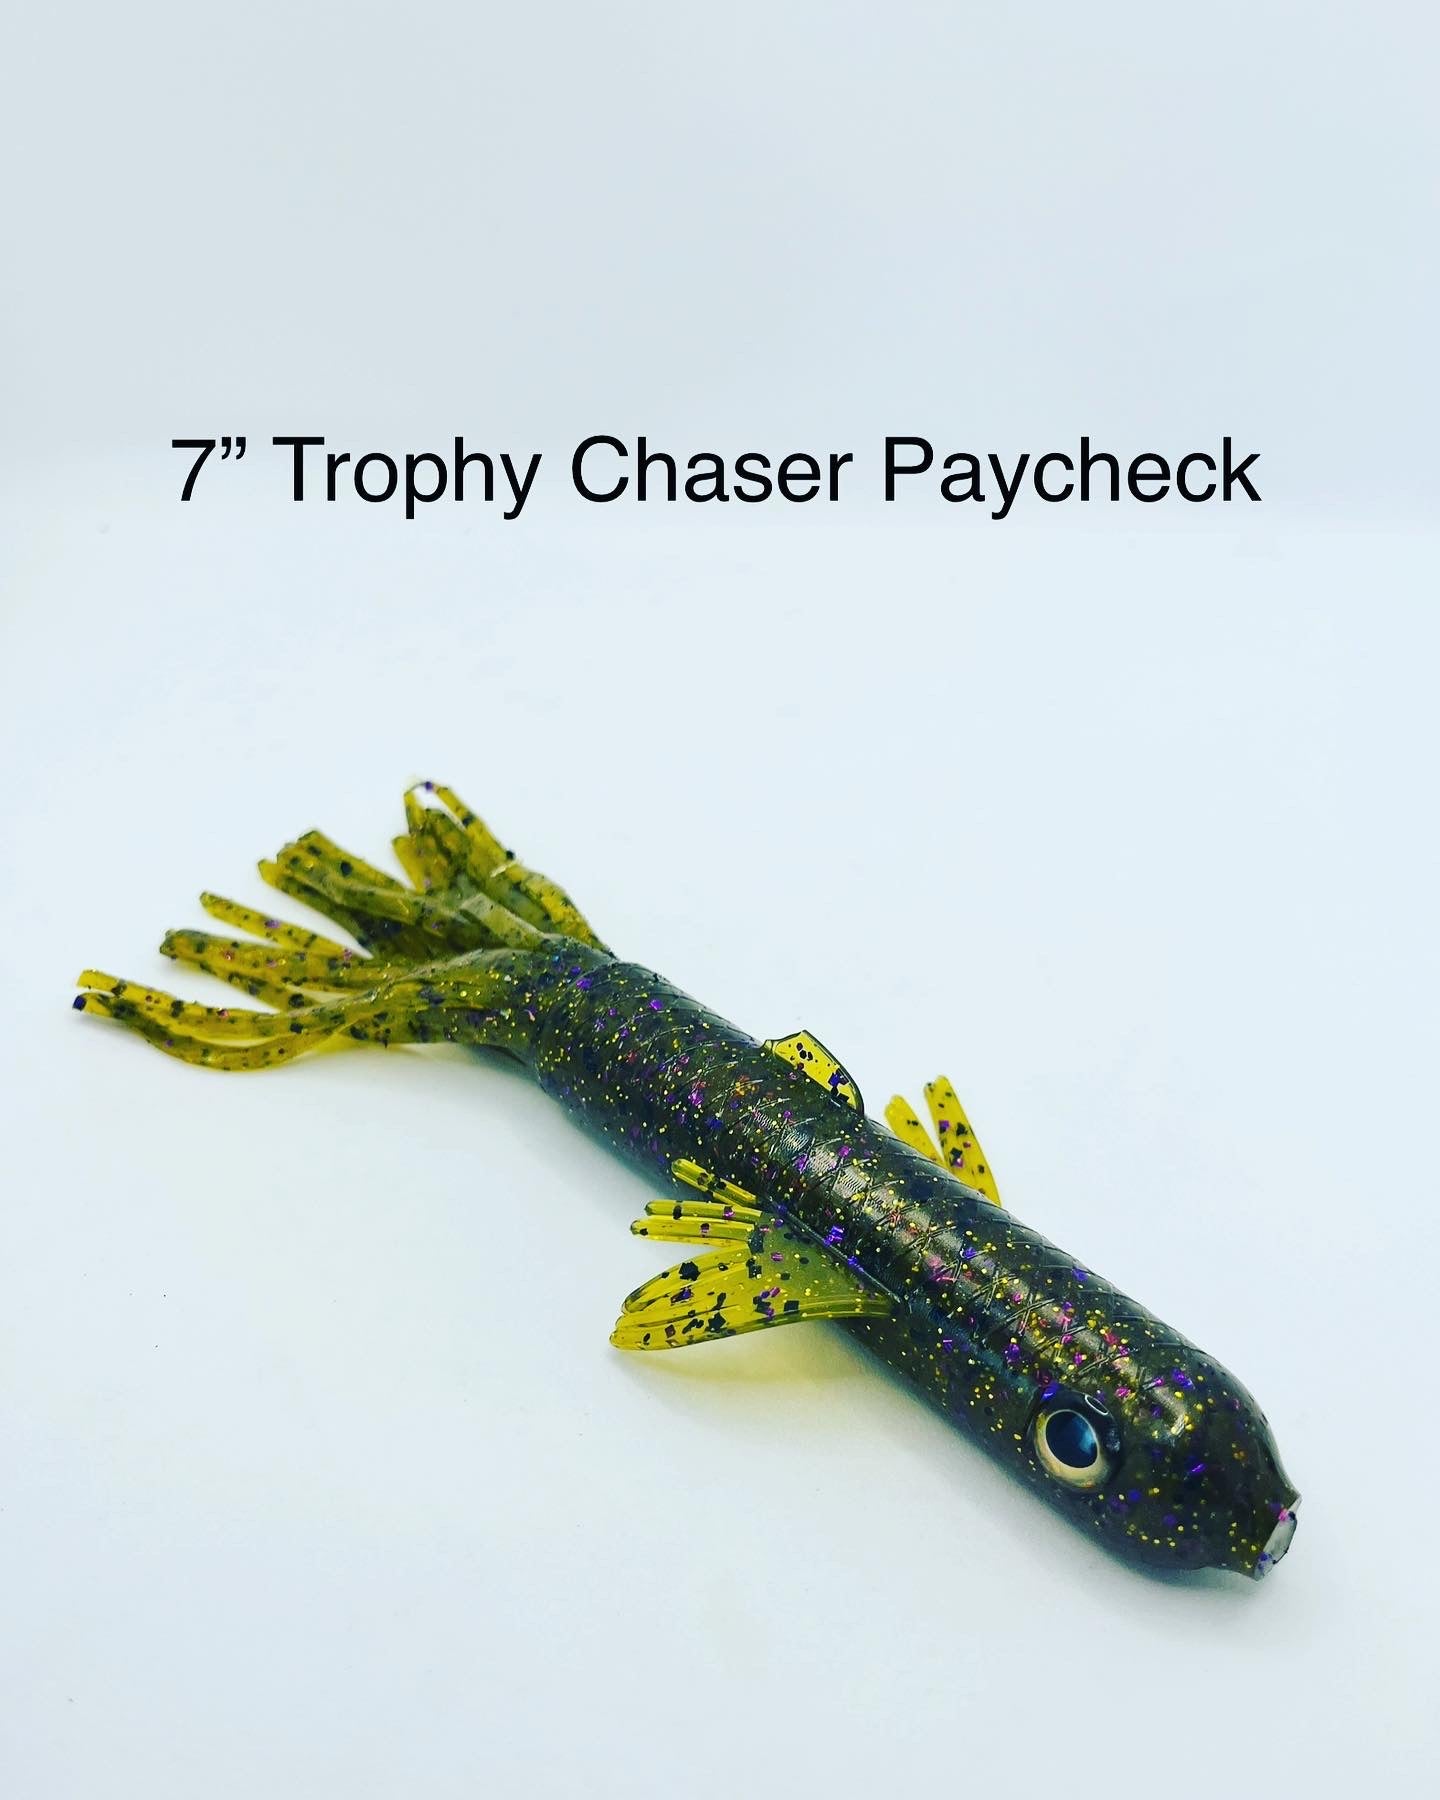 7 Trophy Chaser